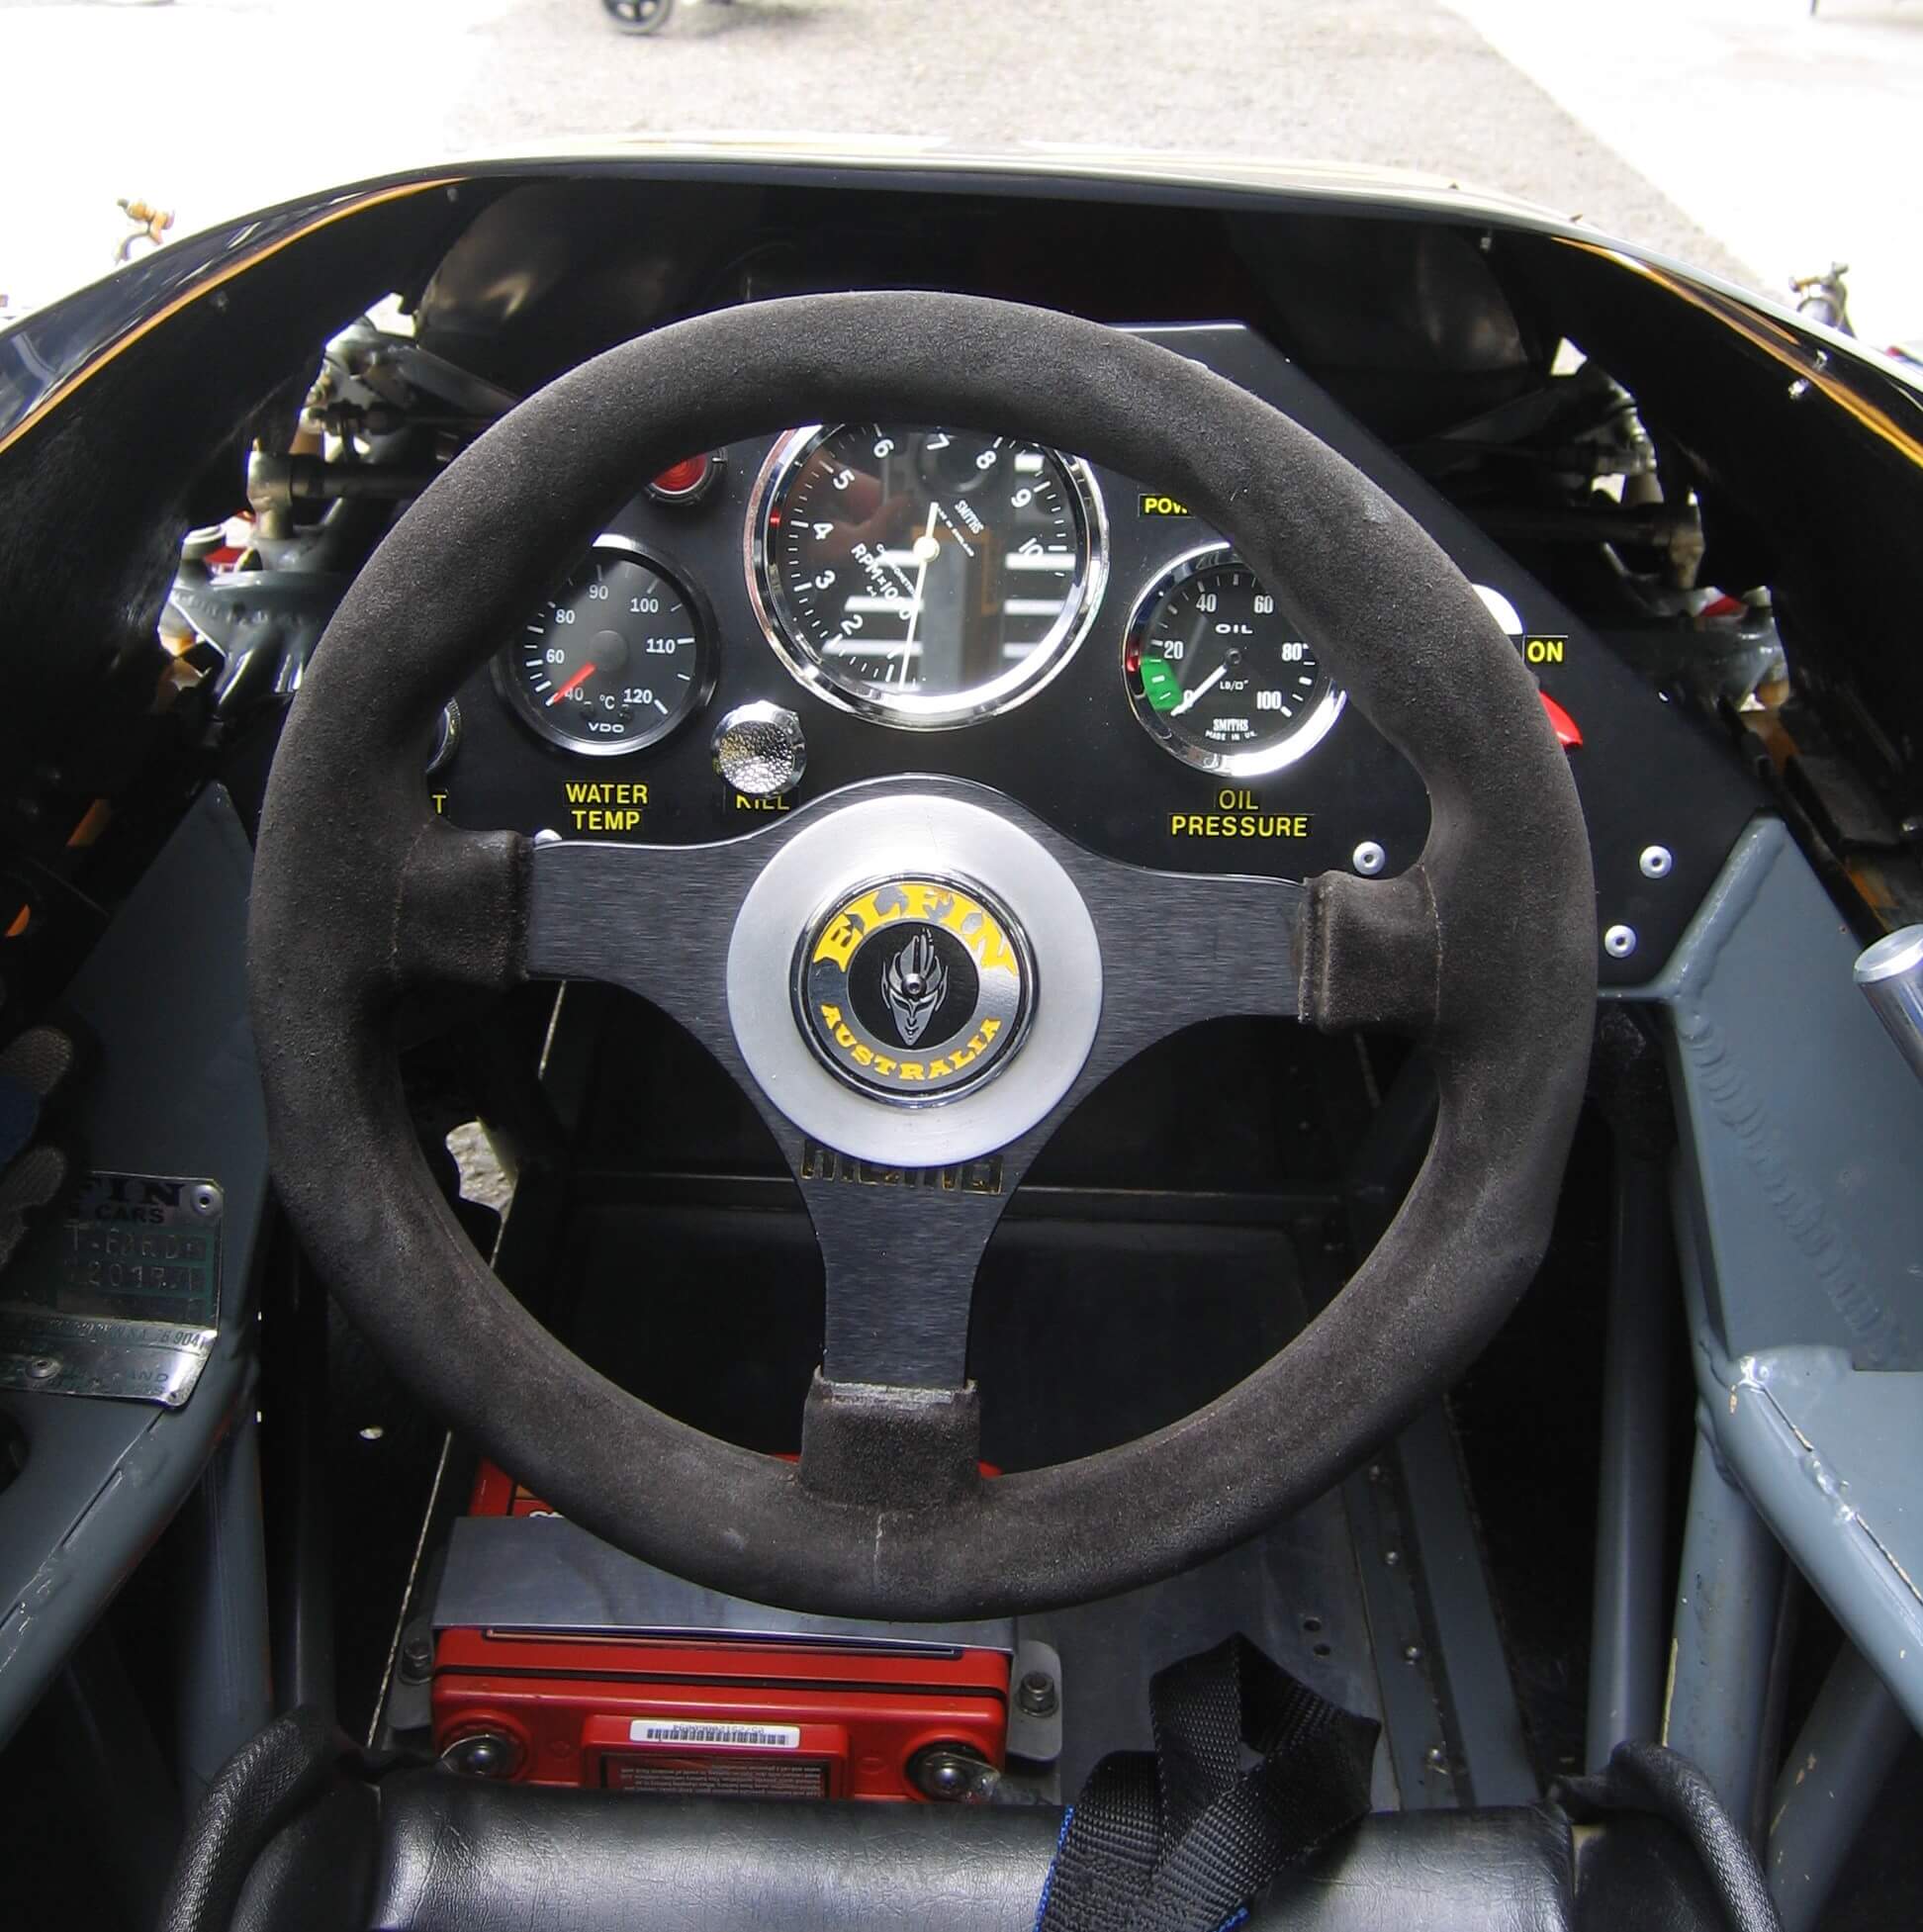 Smaller diameter steering wheel